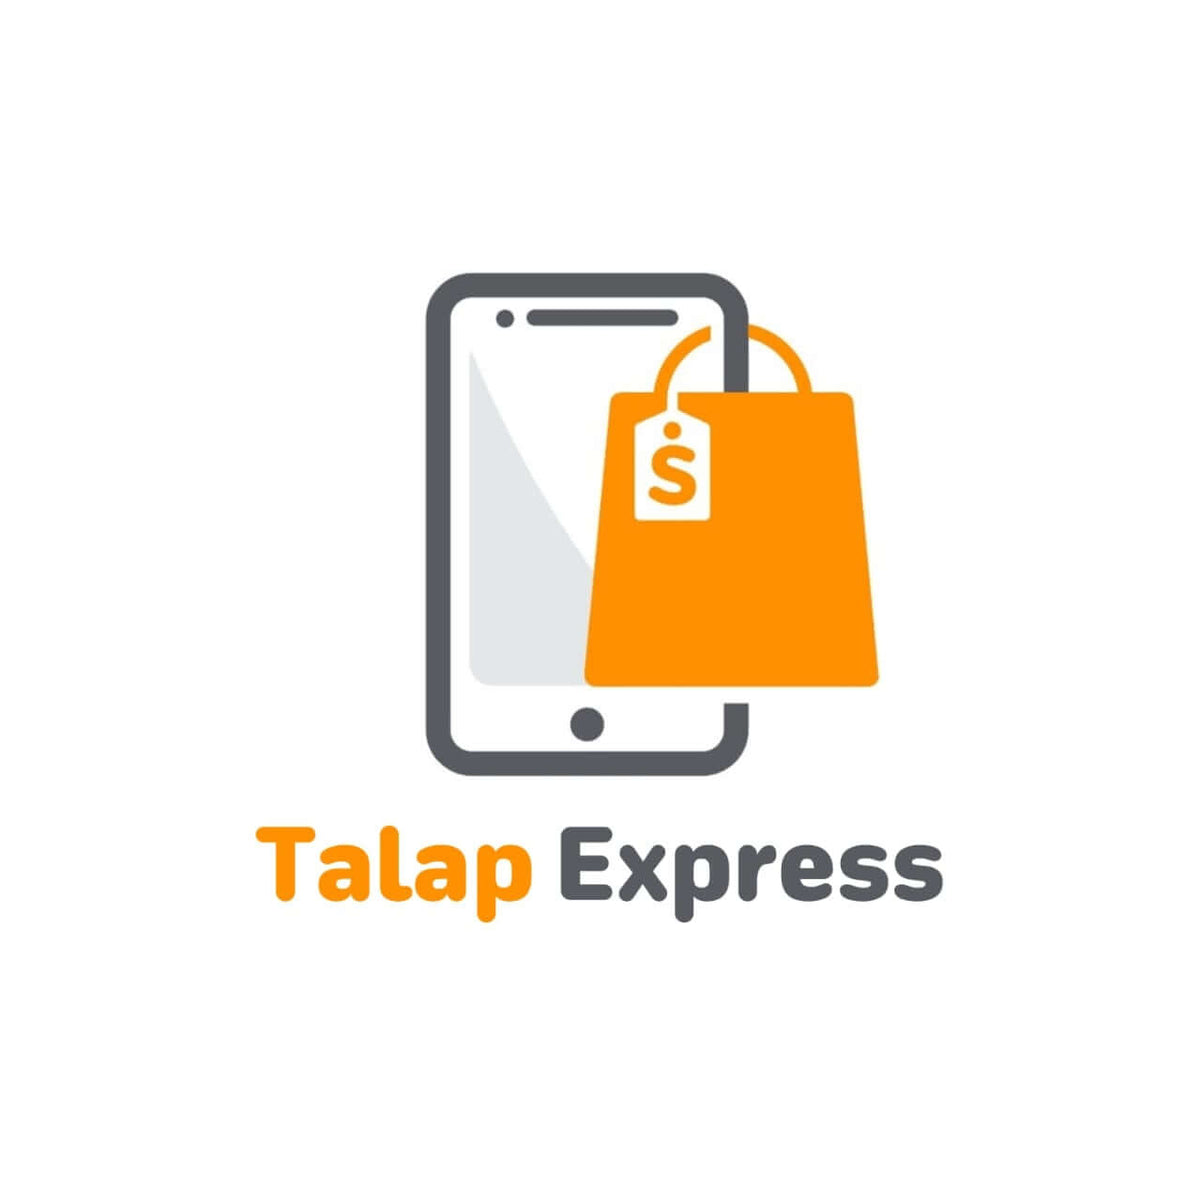 Talap Express